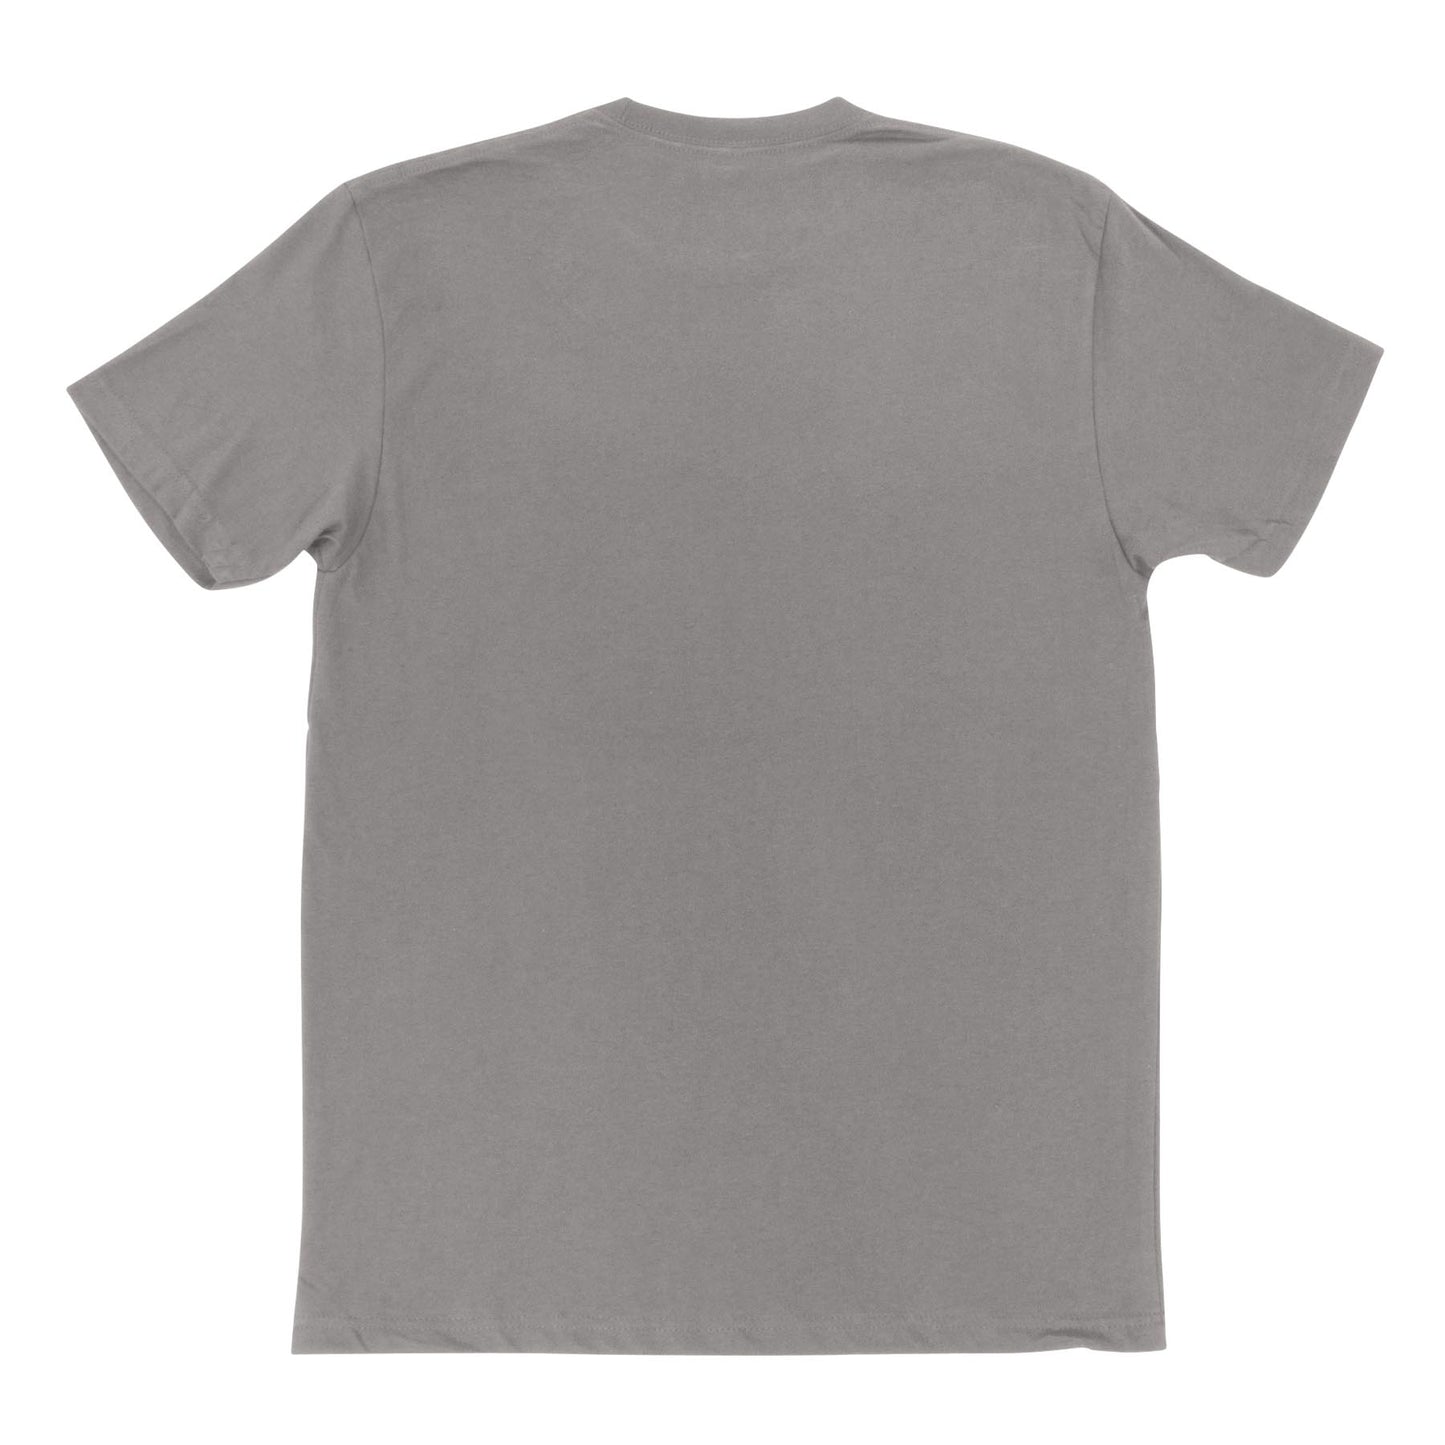 Independent Tile Bar Short Sleeve Midweight T-Shirt - Medium Grey